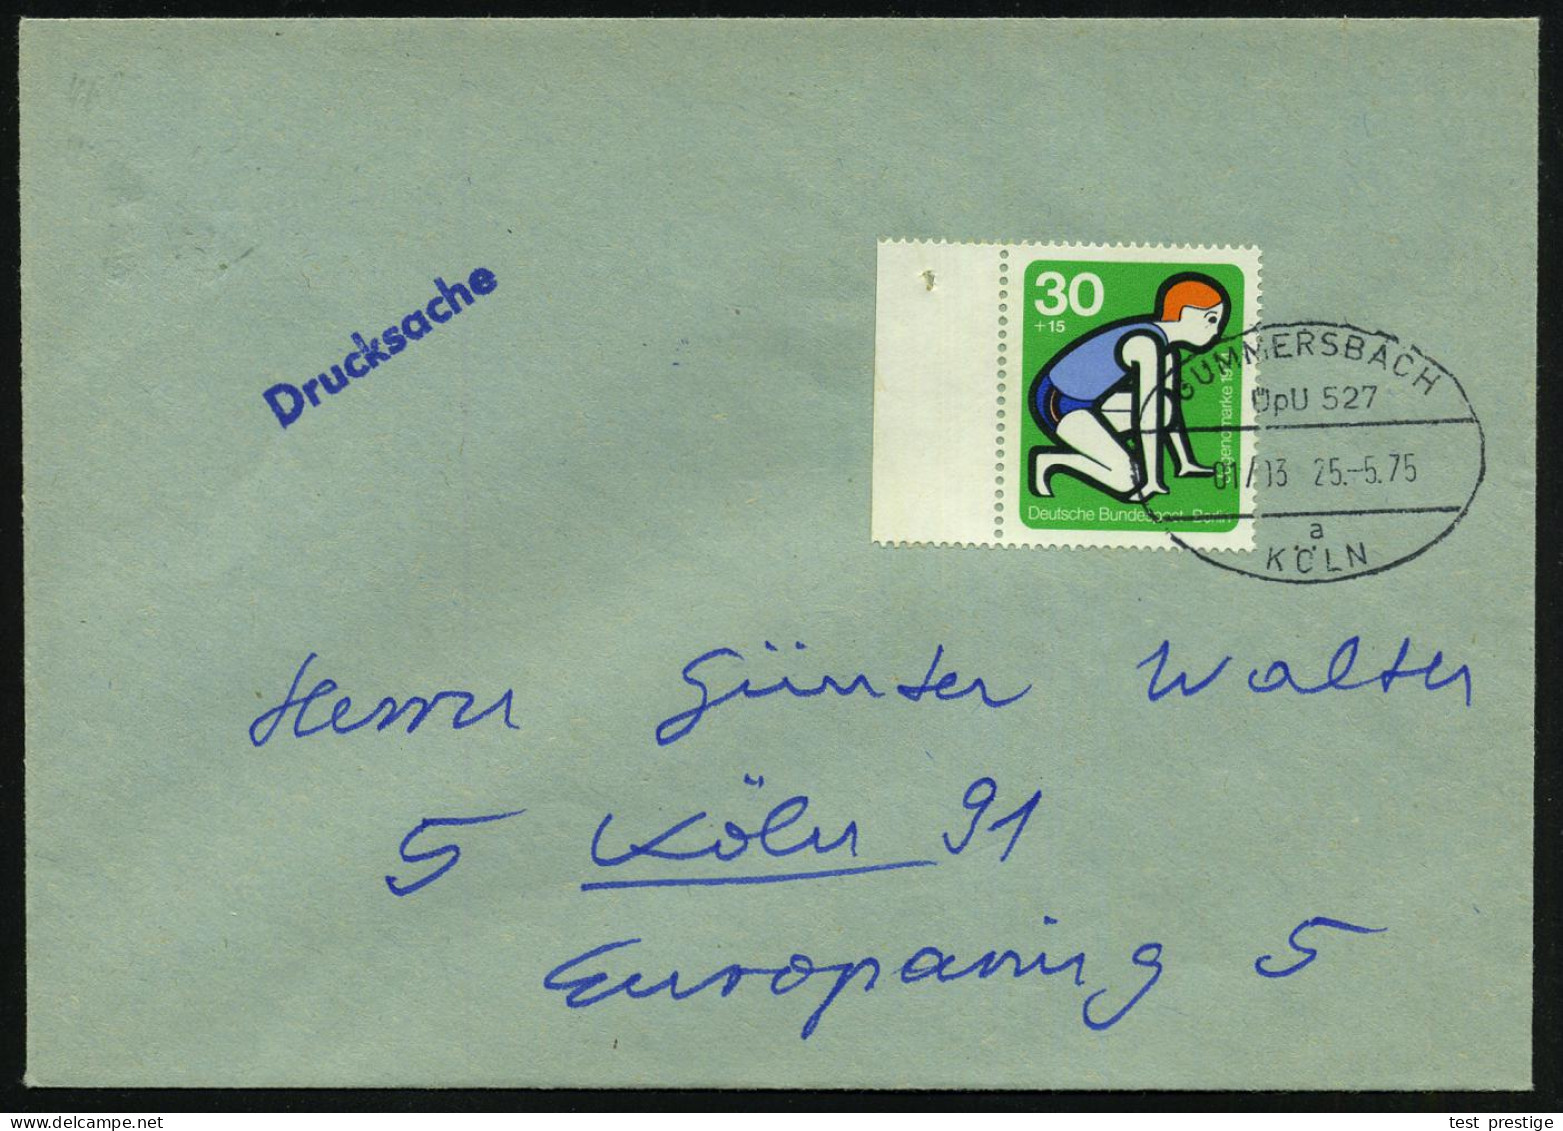 GUMMERSBACH/ ÜpU 527/ 01/ 03/ A/ KÖLN 1975 (25.5.) Oval-Steg = Mobiles Postamt Im Überland-Postomnibus , Klar Gest. Inl. - Cars